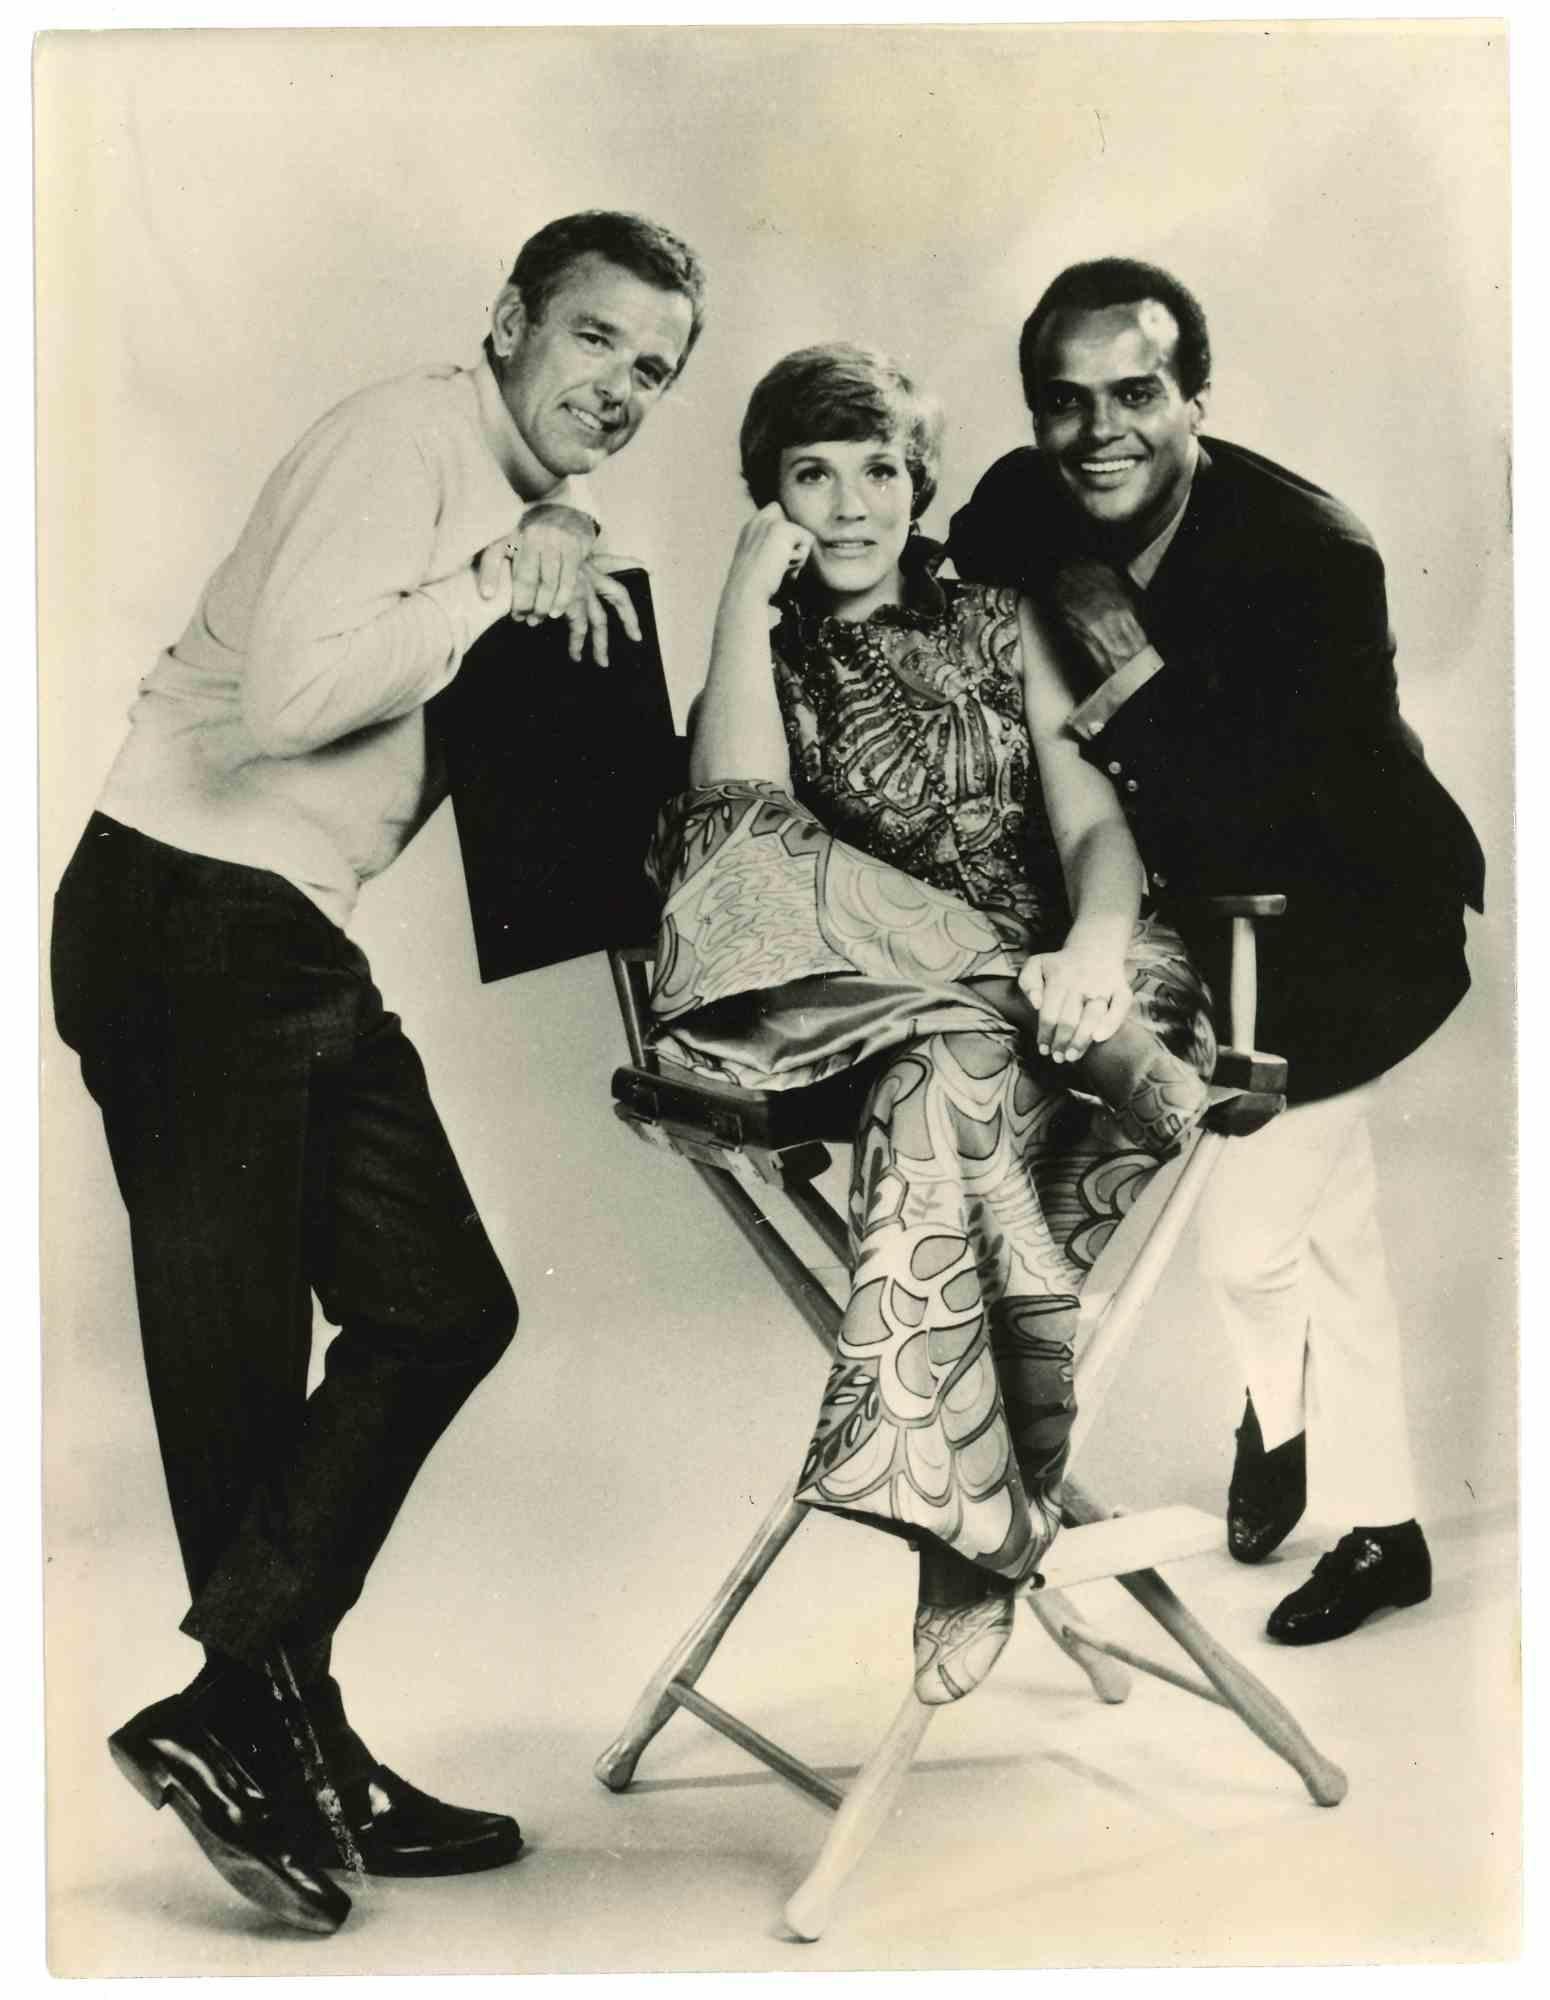 Gewer Champion, Julie Andrews and Harry Belafonte - Vintage Photo  - 1960s